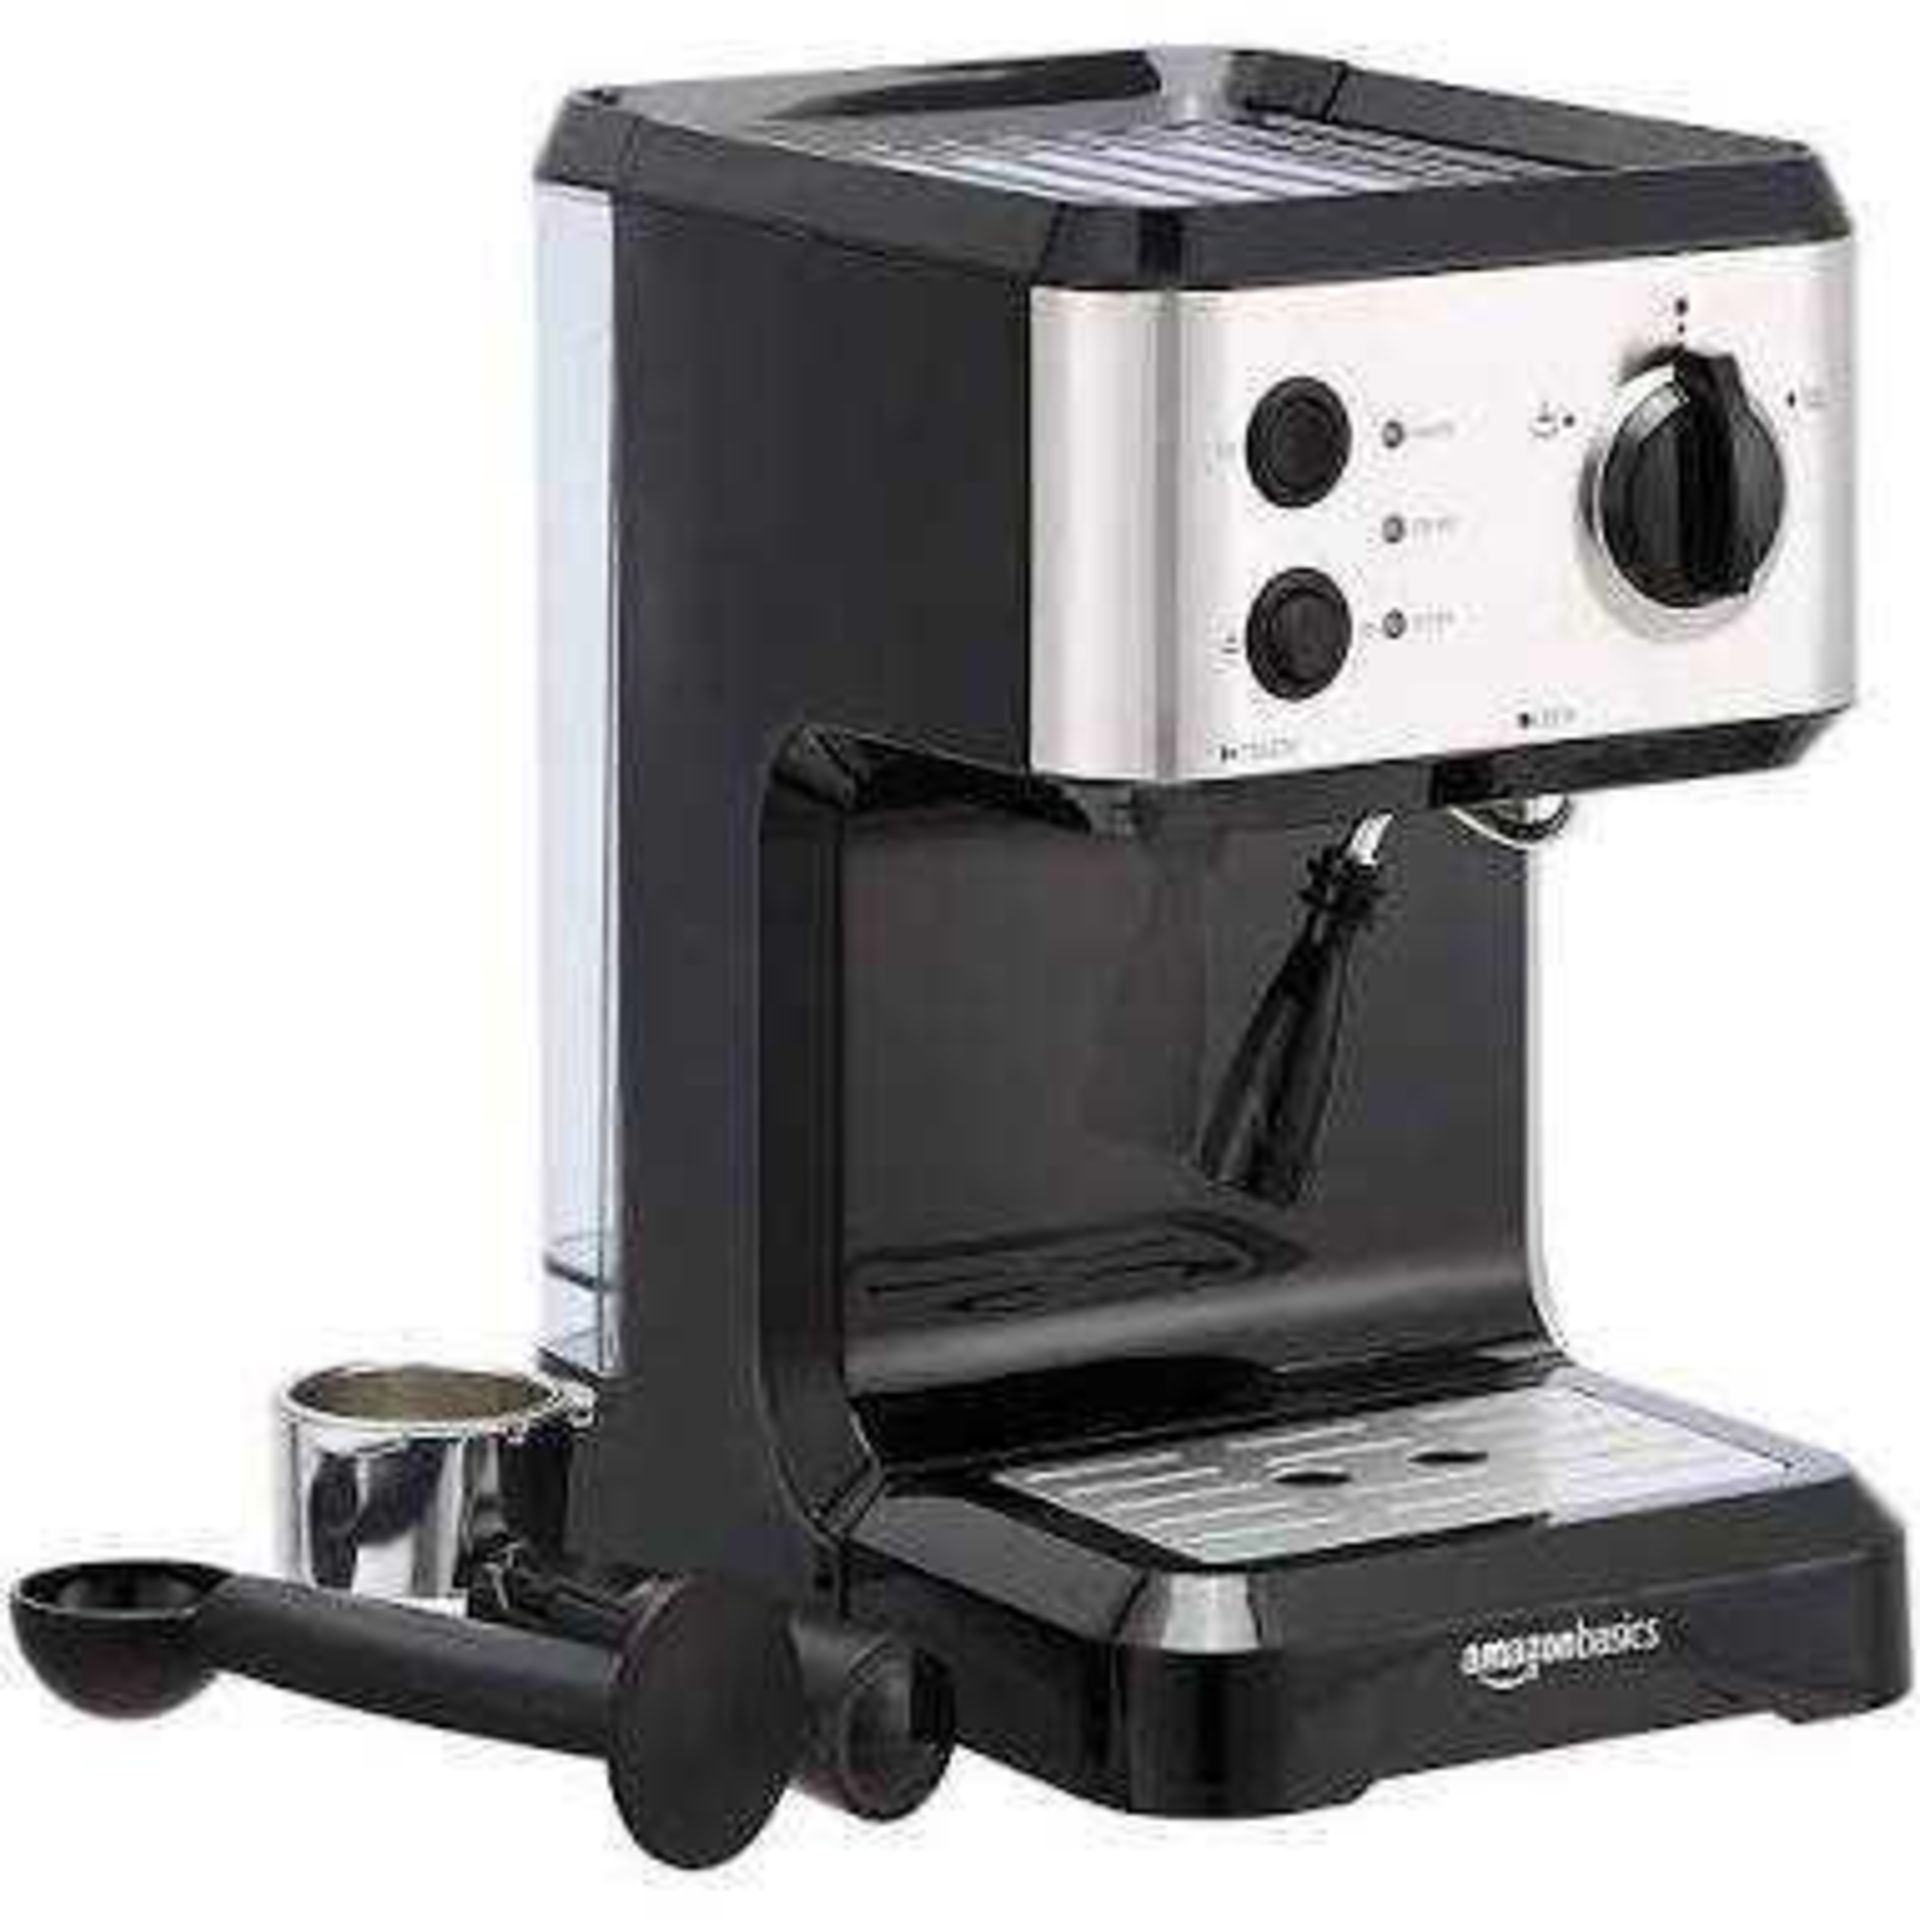 RRP £80 Boxed Amazon Basics Espresso Machine